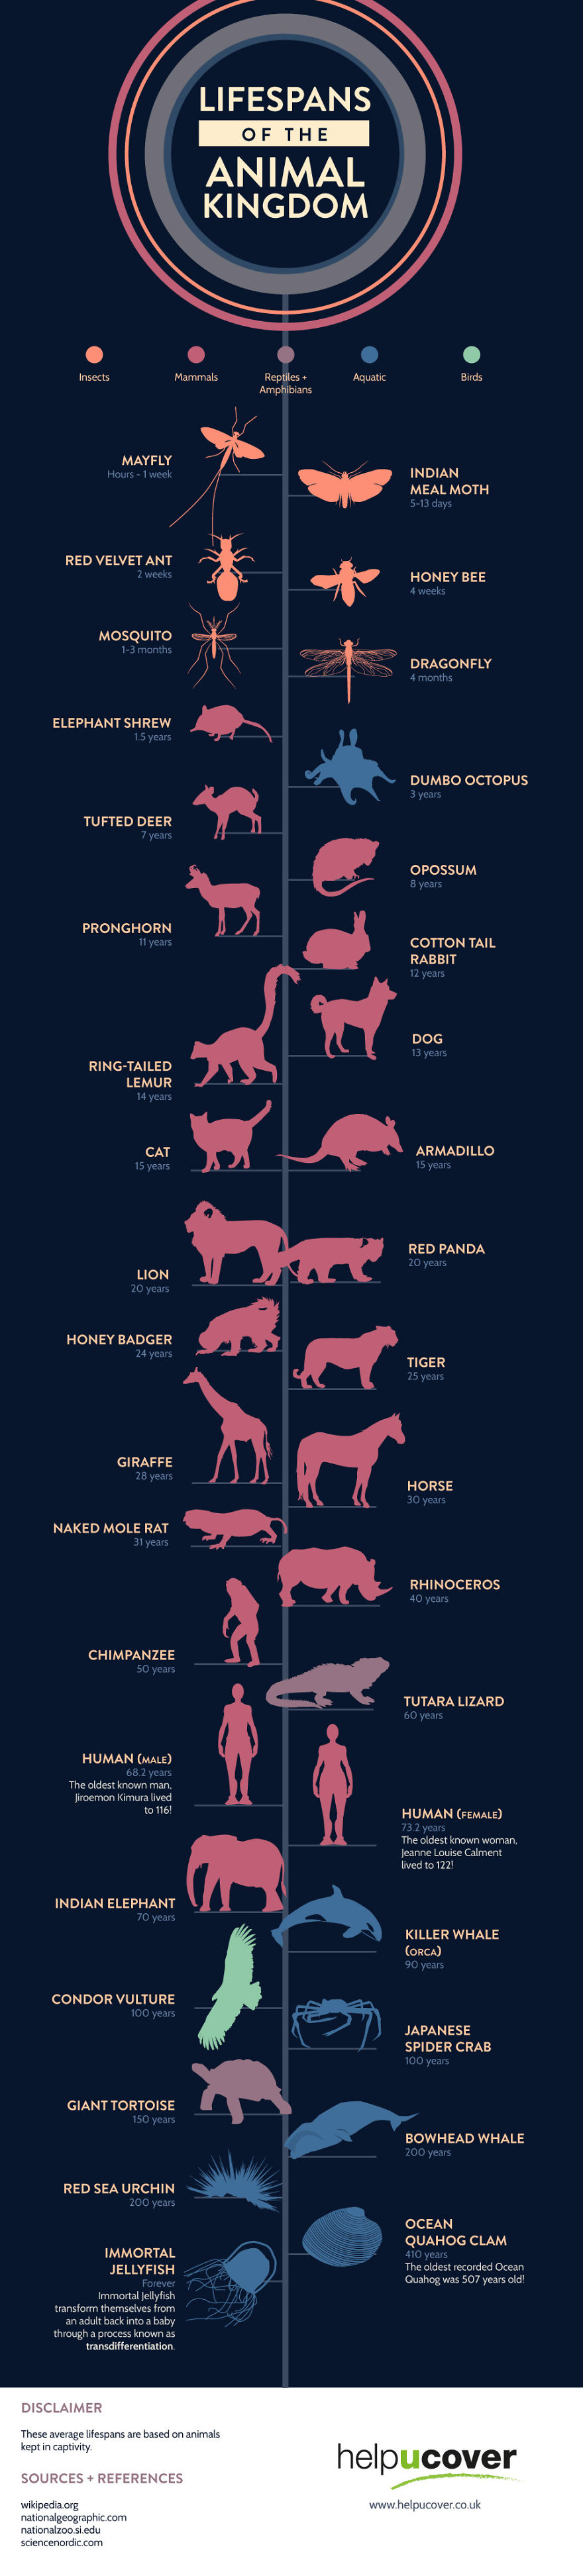 Lifespans Of The Animal Kingdom